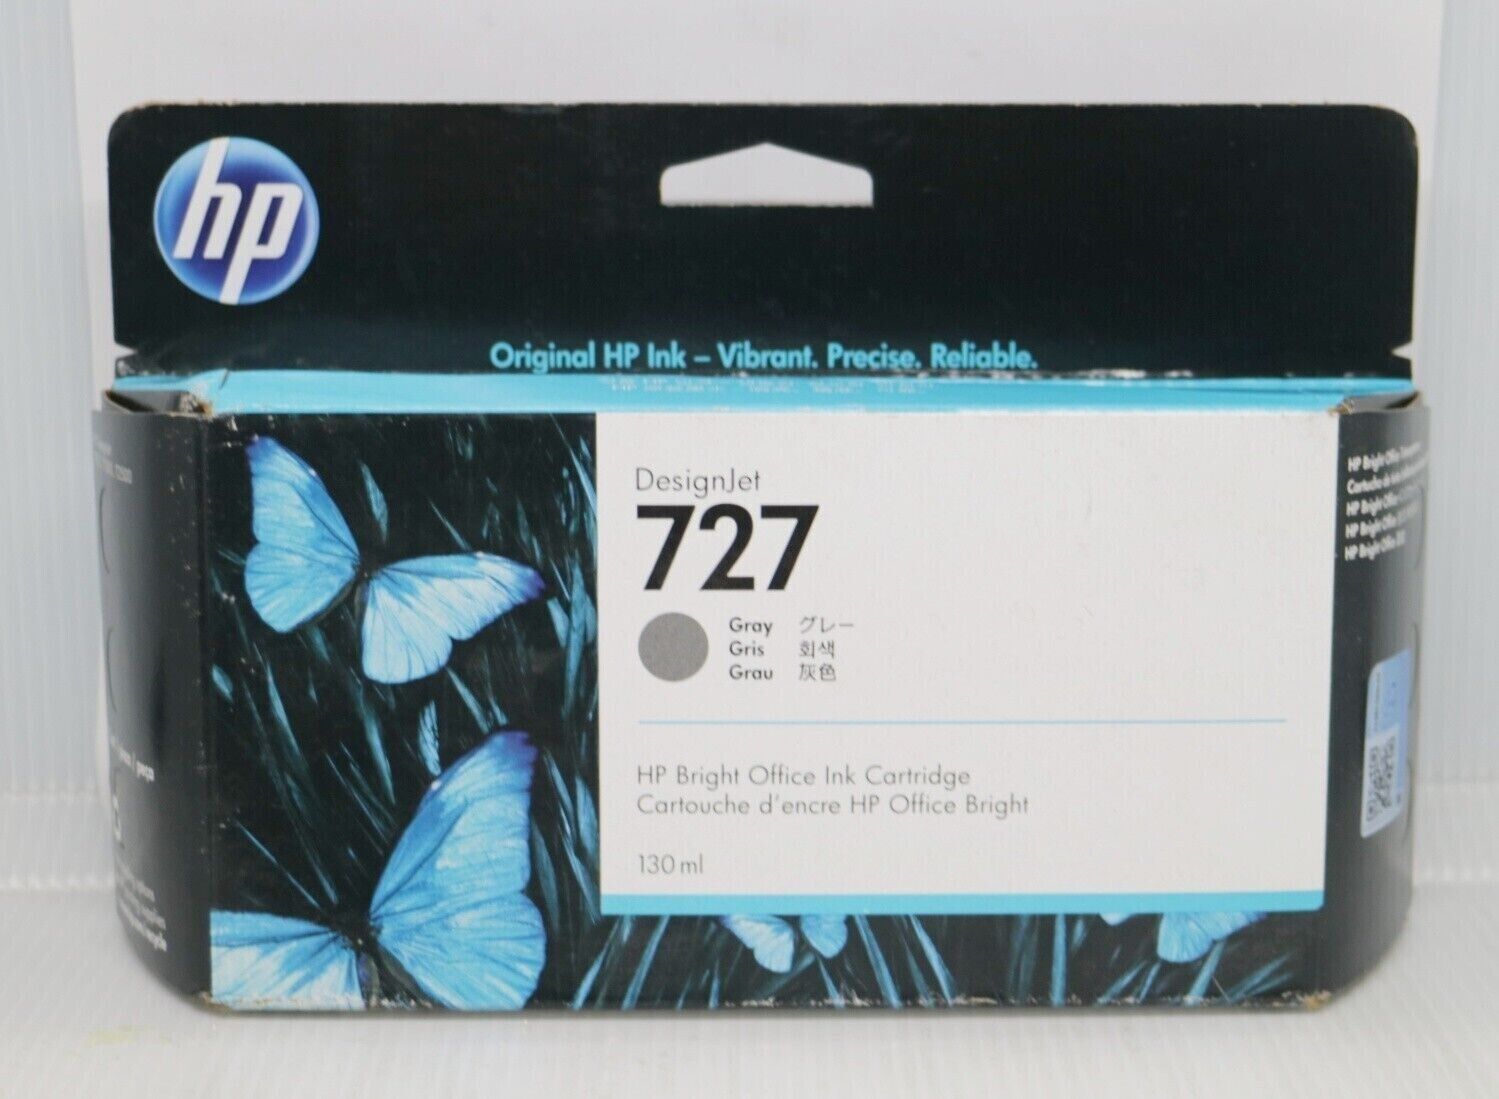 New HP DesignJet  727 GRAY Ink Cartridge B3P24A  130ml  2019